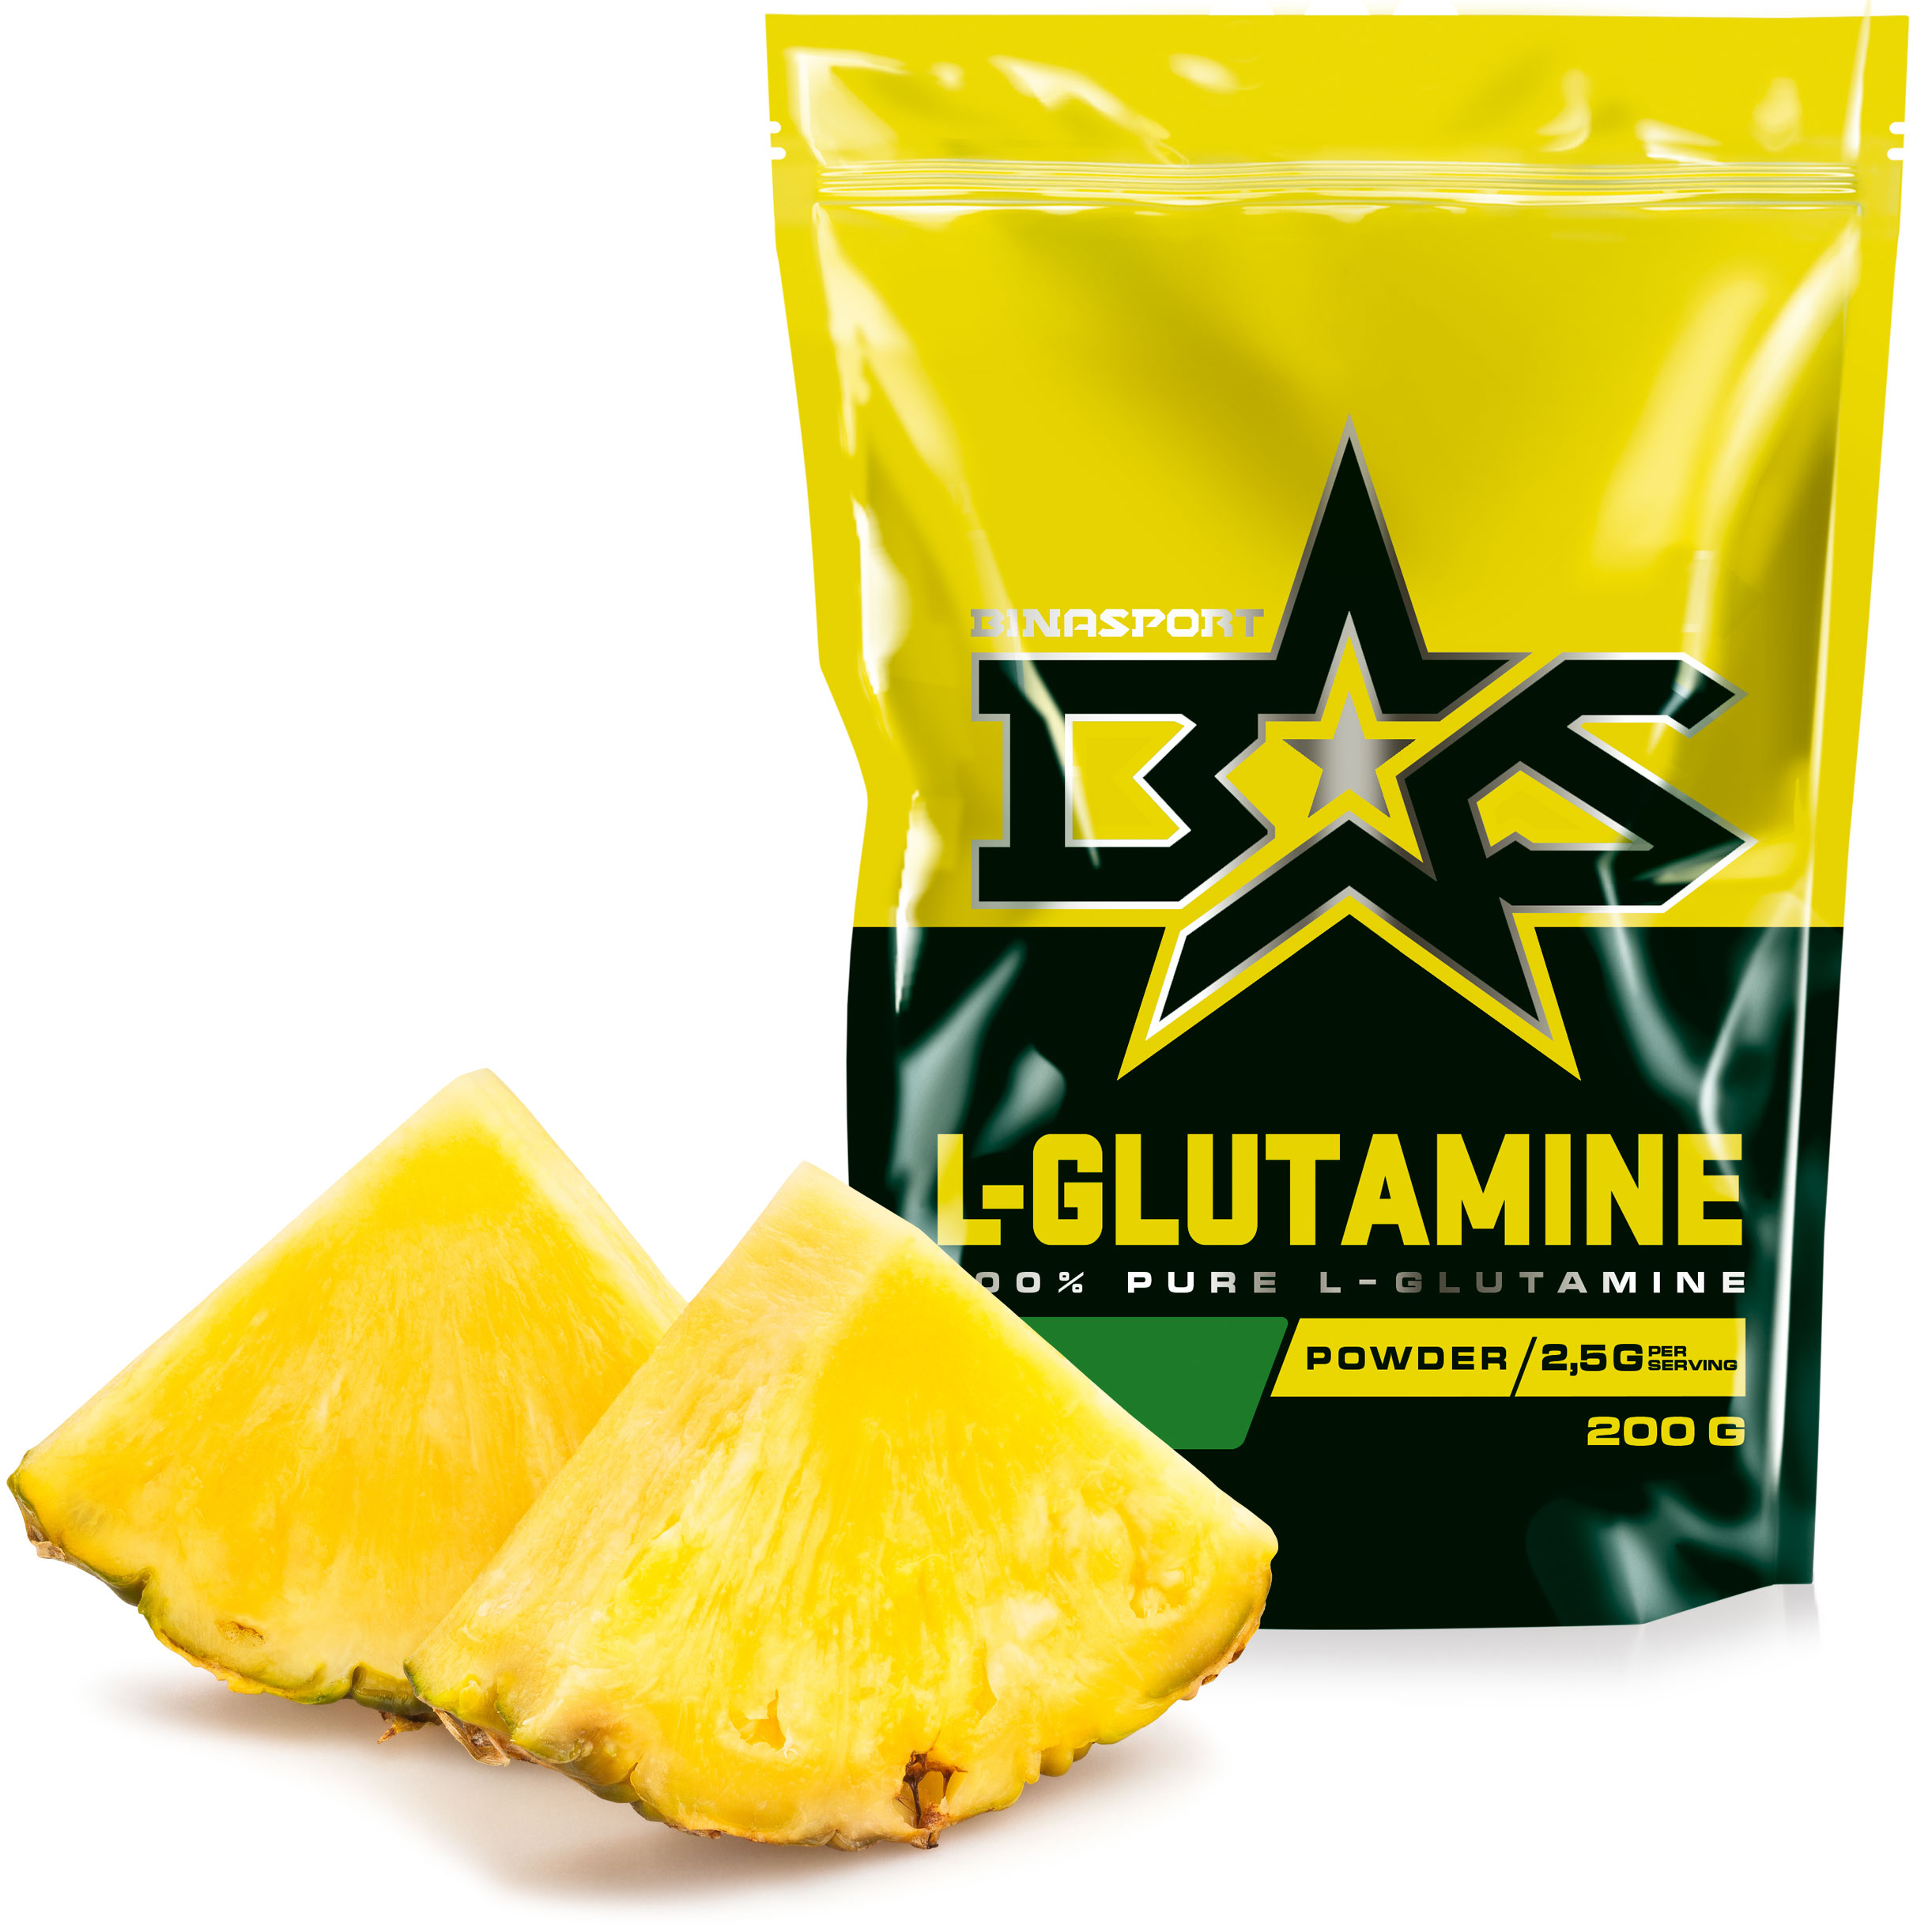 фото L-glutamine binasport, 200 г, pineapple